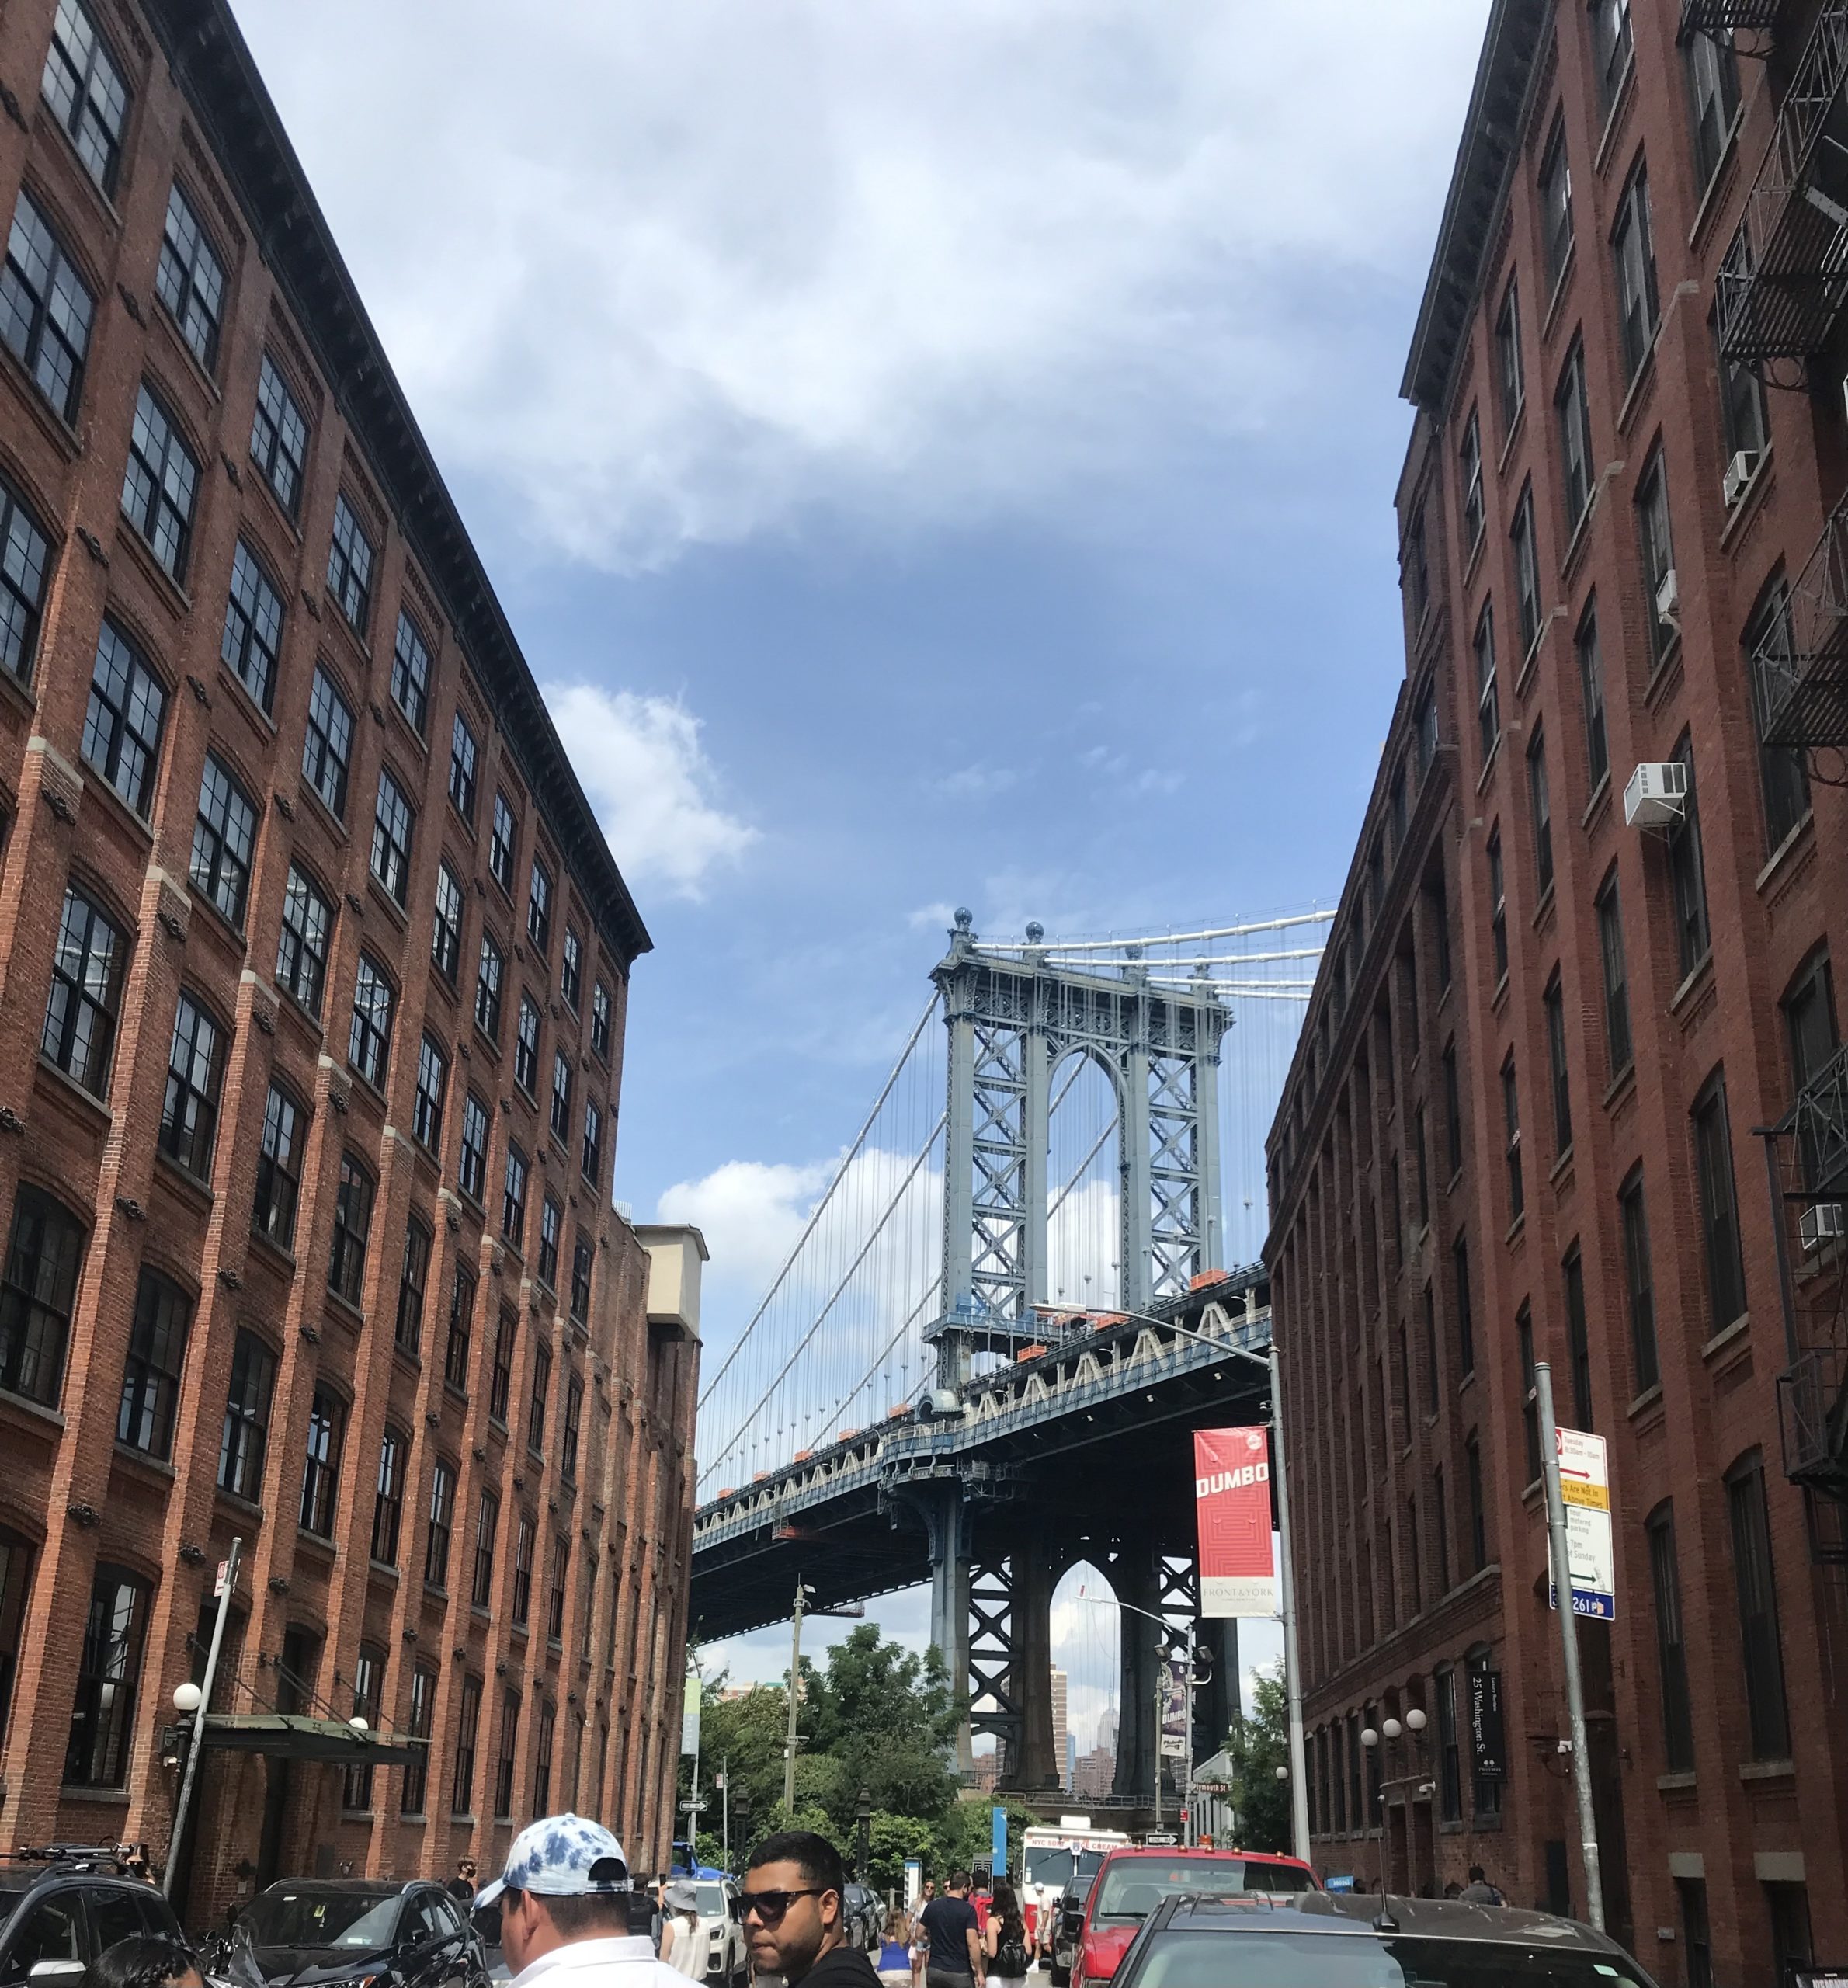 The Manhattan Bridge in Dumbo, Brooklyn.